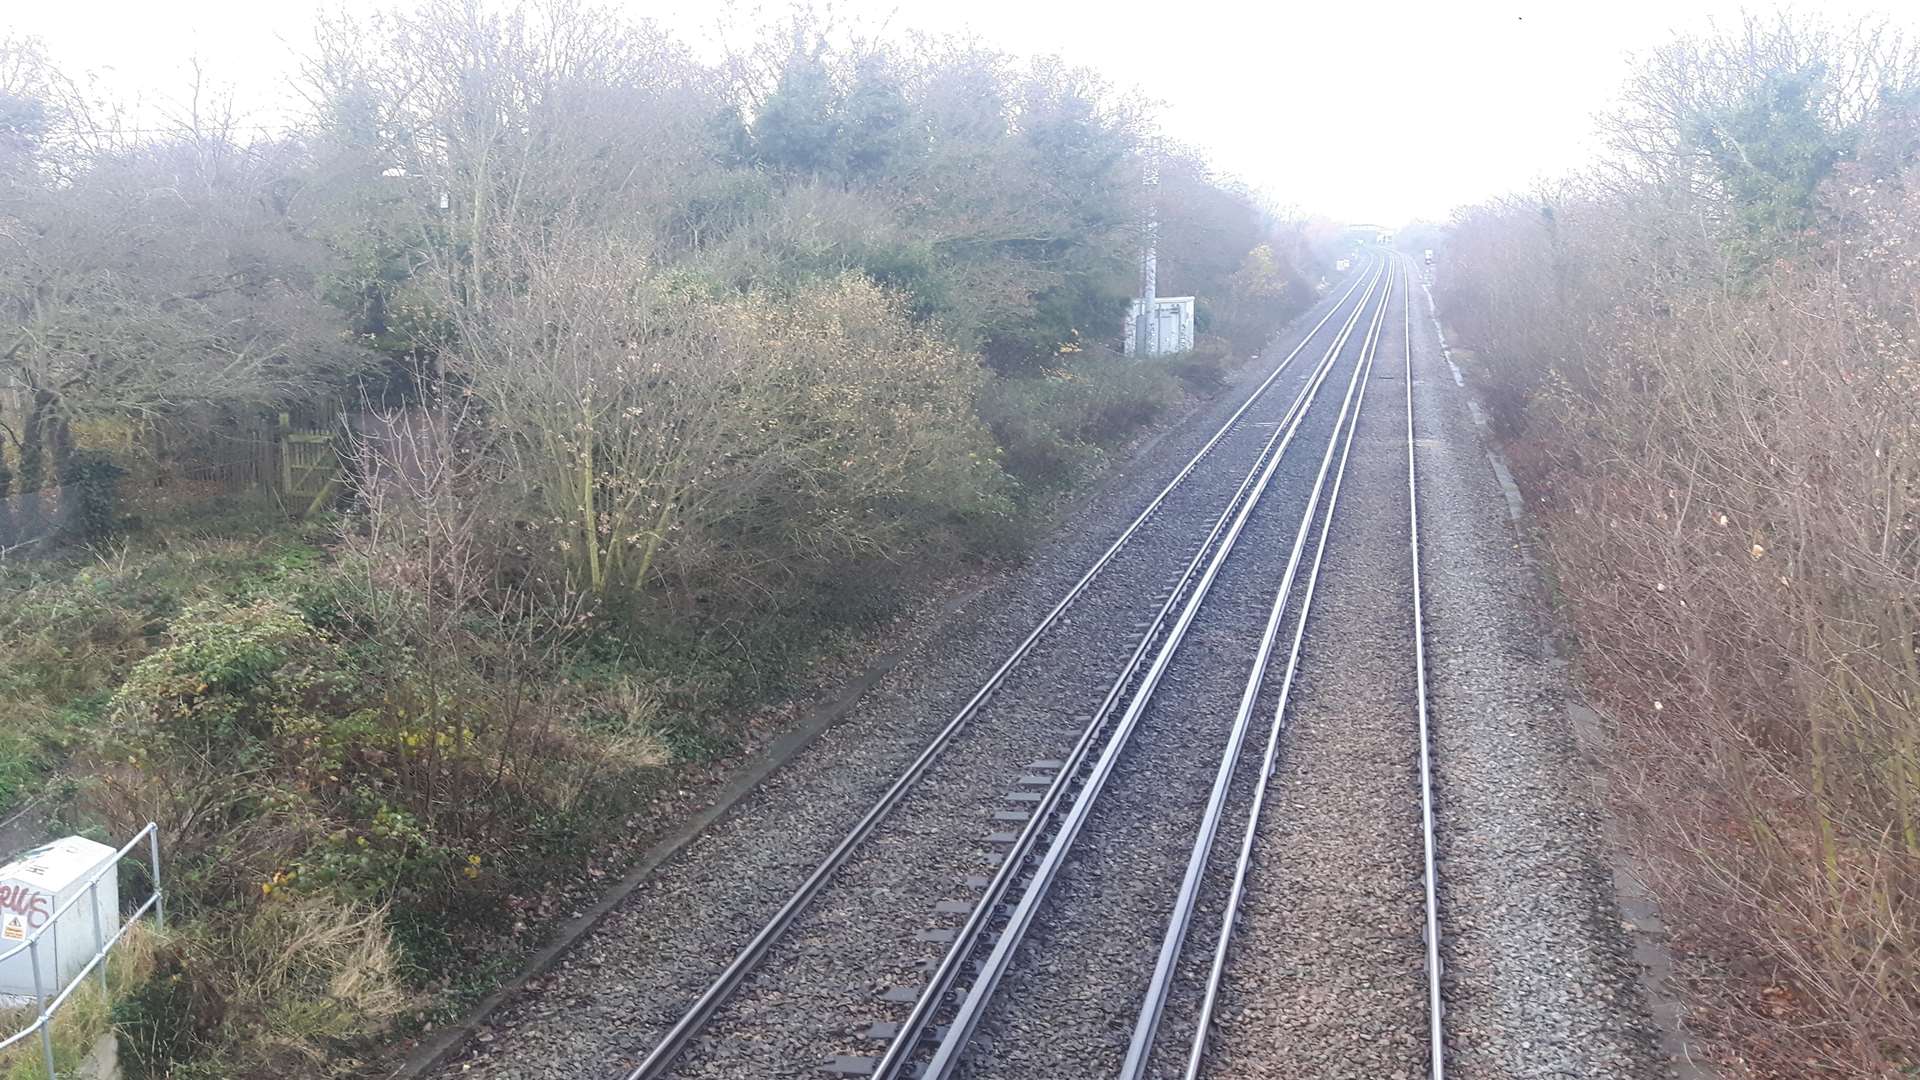 The railway line near Joy Lane, Whitstable